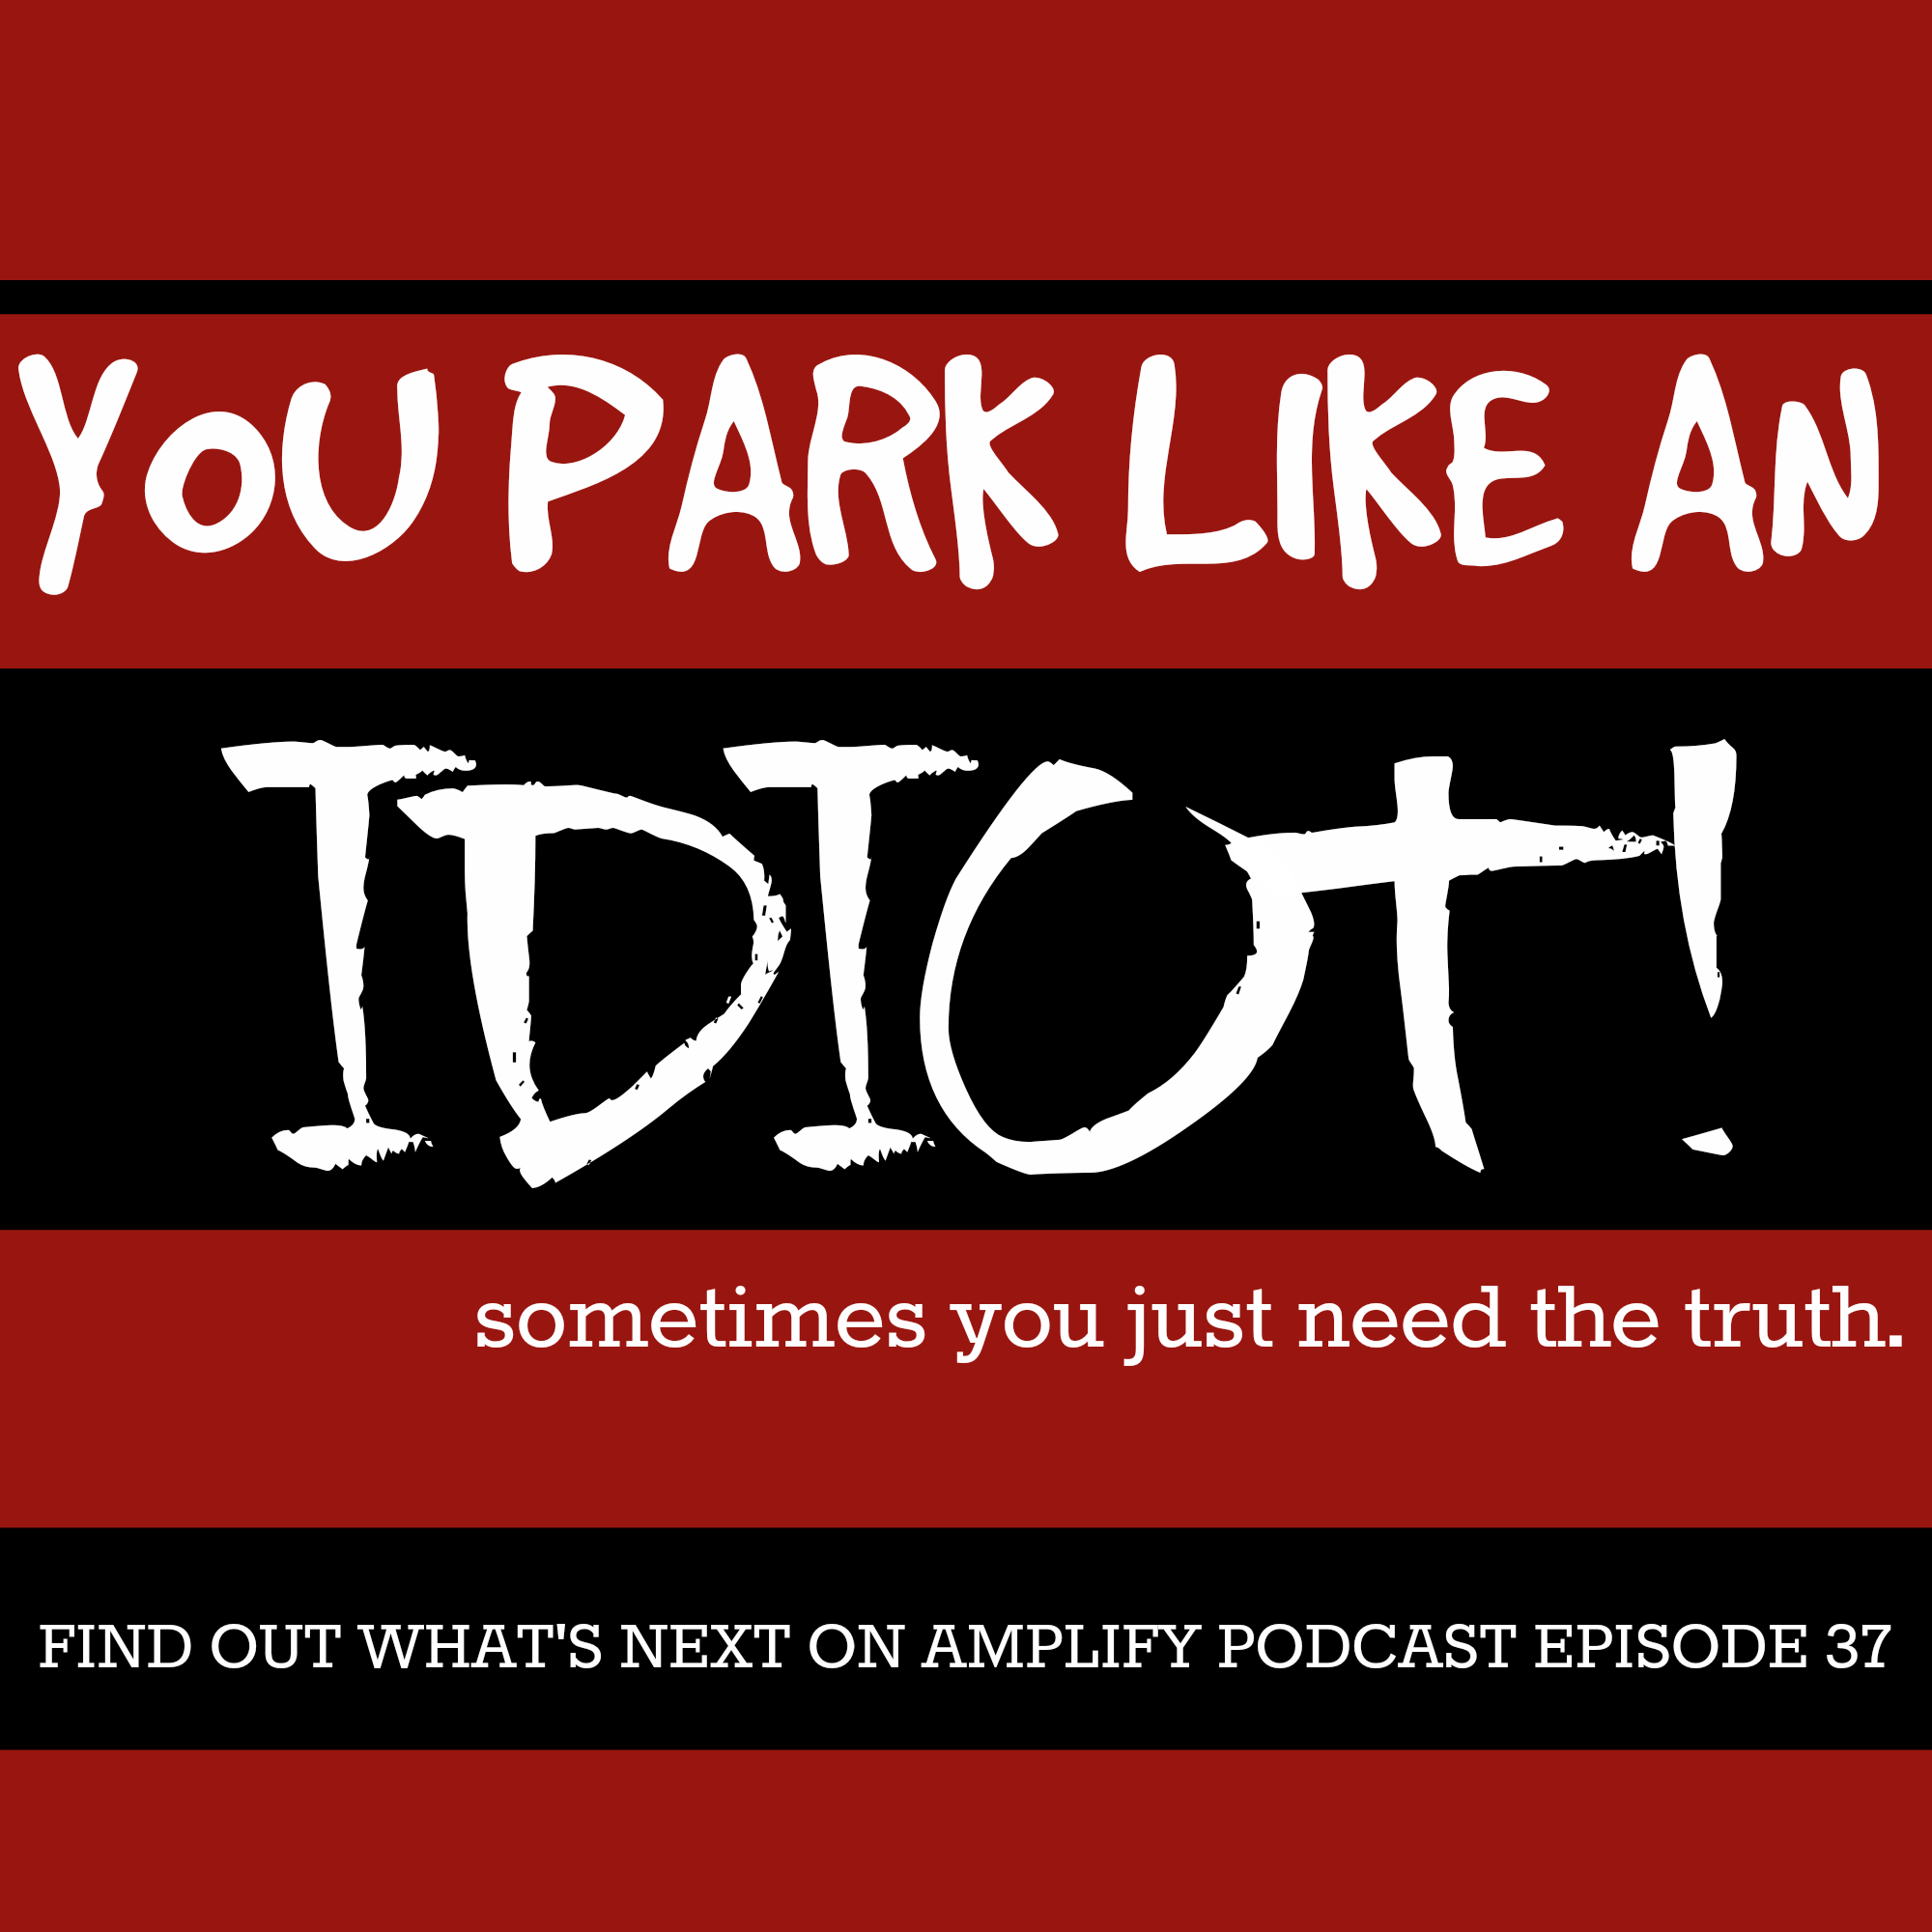 You Park Like an Idiot